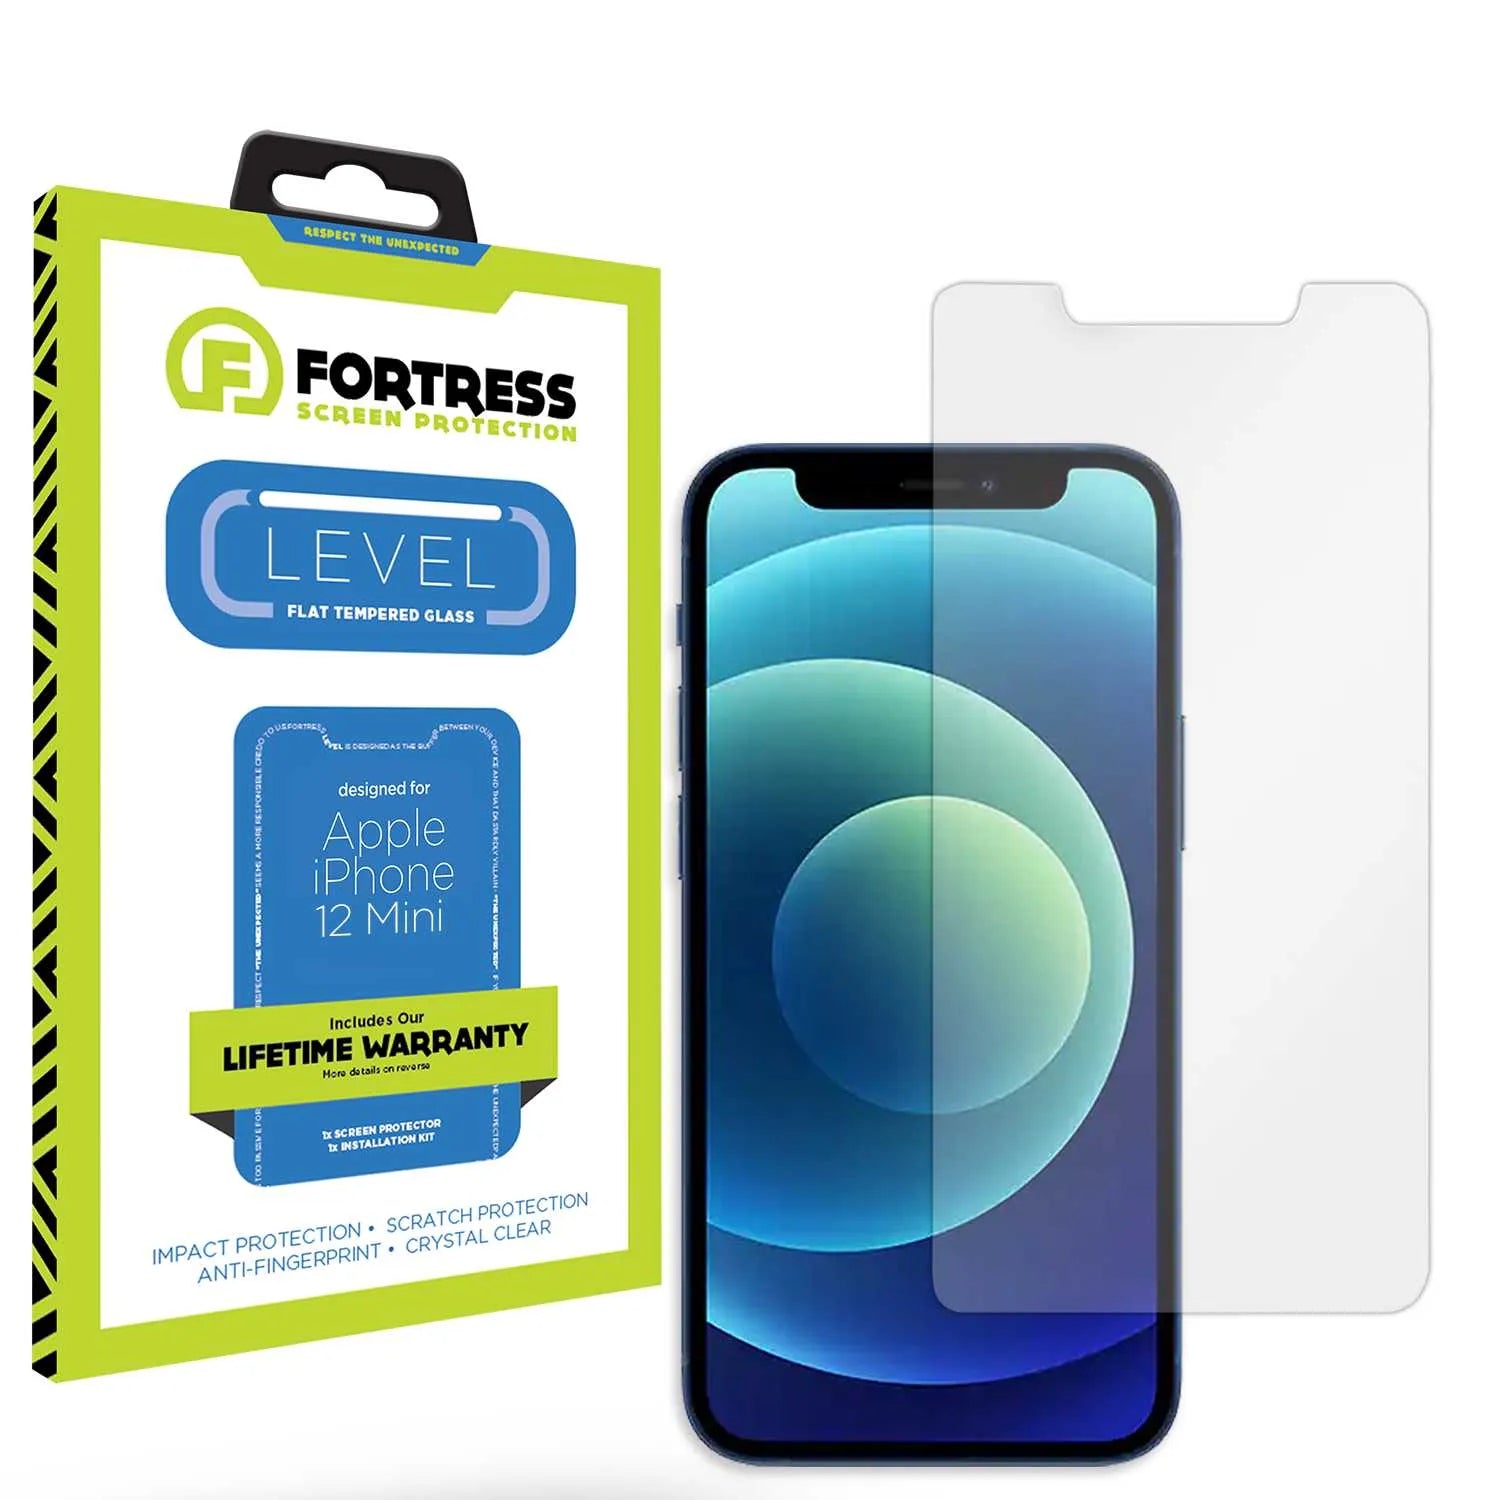 Fortress Fortress Warranty Replacement Program AppleiPhone12MiniScreenProtector Warranty 8.99